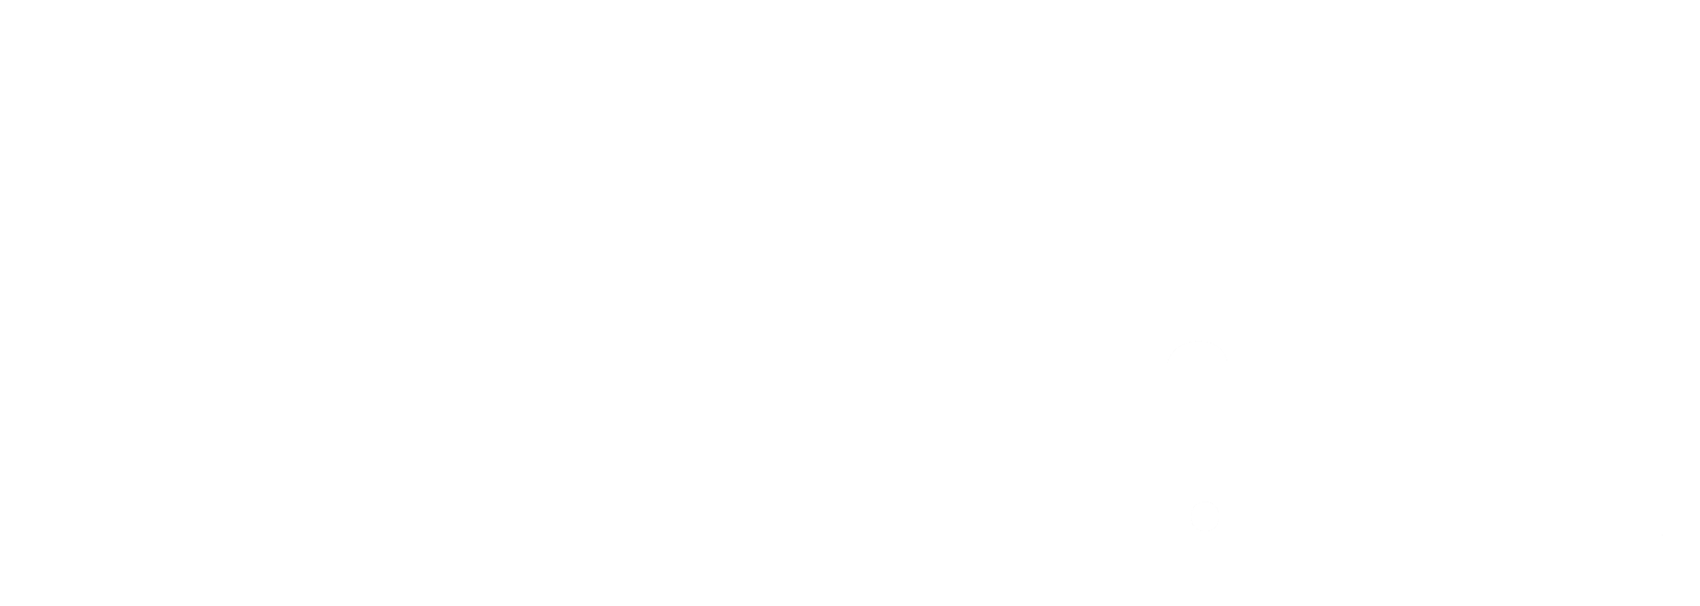 Logo-Infinite